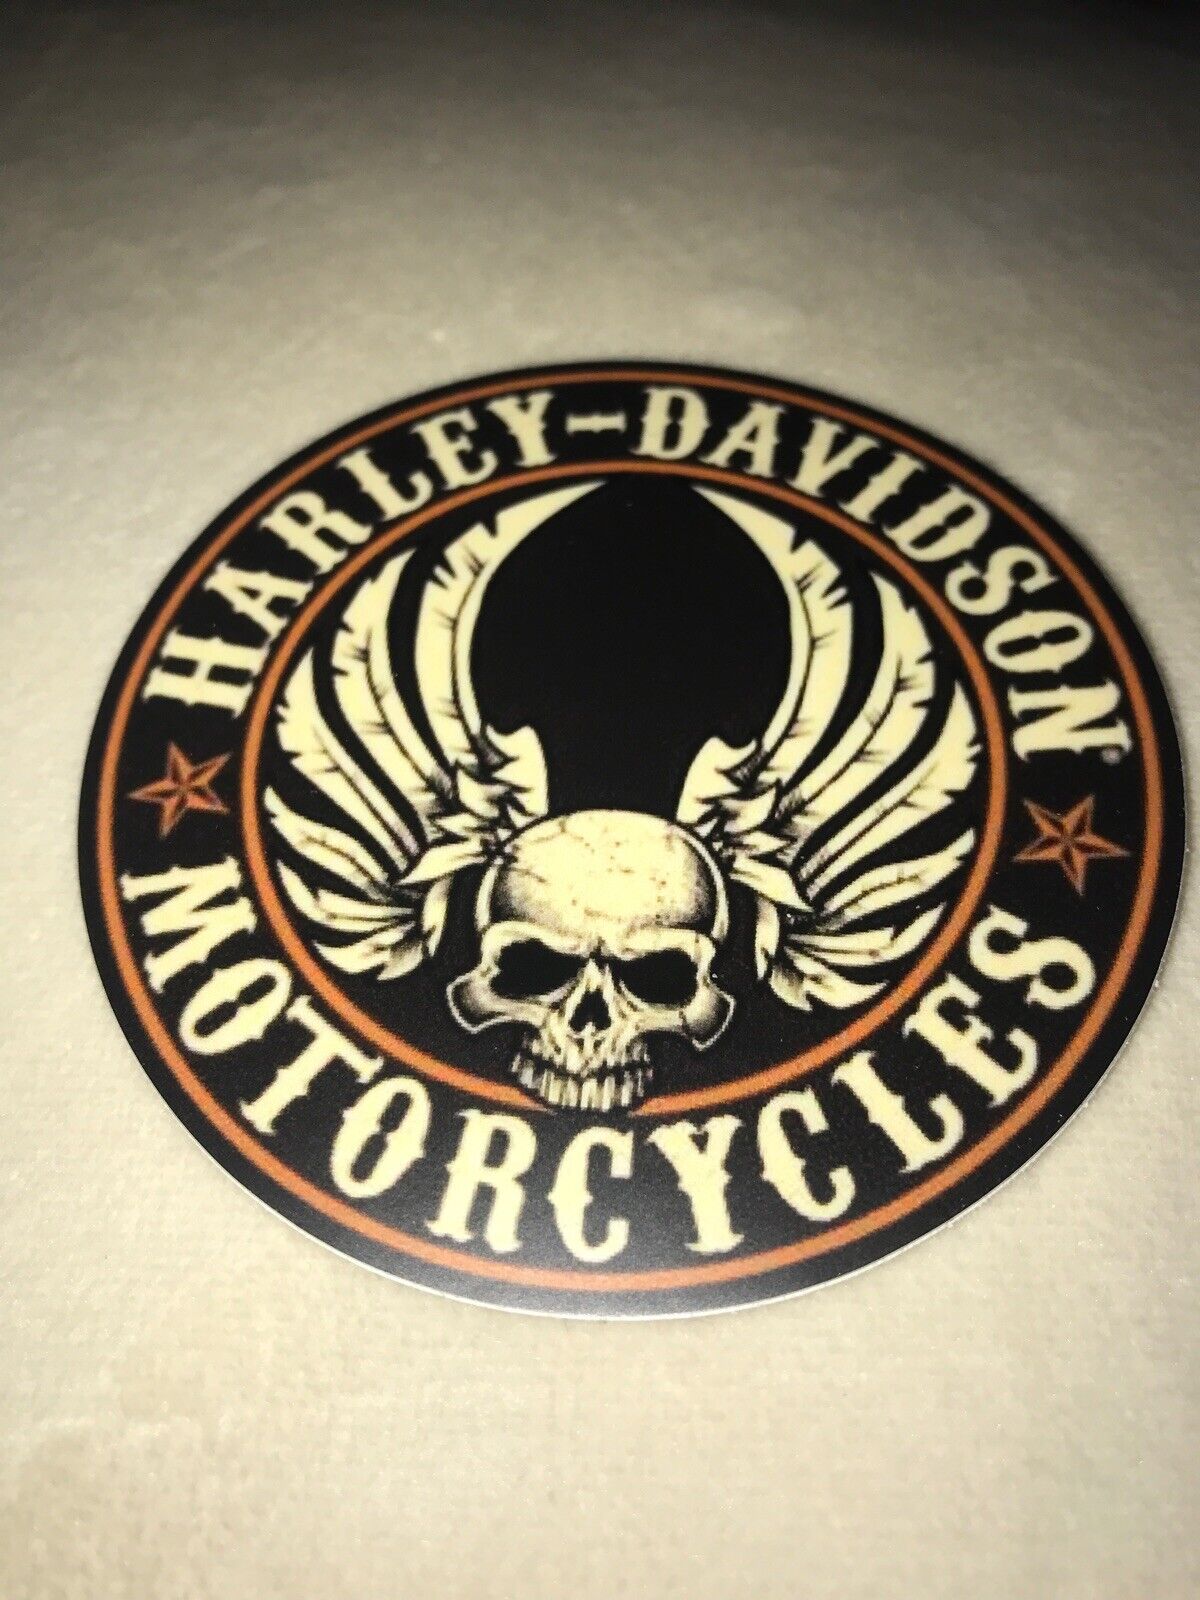 HARLEY DAVIDSON MOTORCYCLES Vintage Decal Sticker 3” Round  BLACK SKULL w/ WINGS